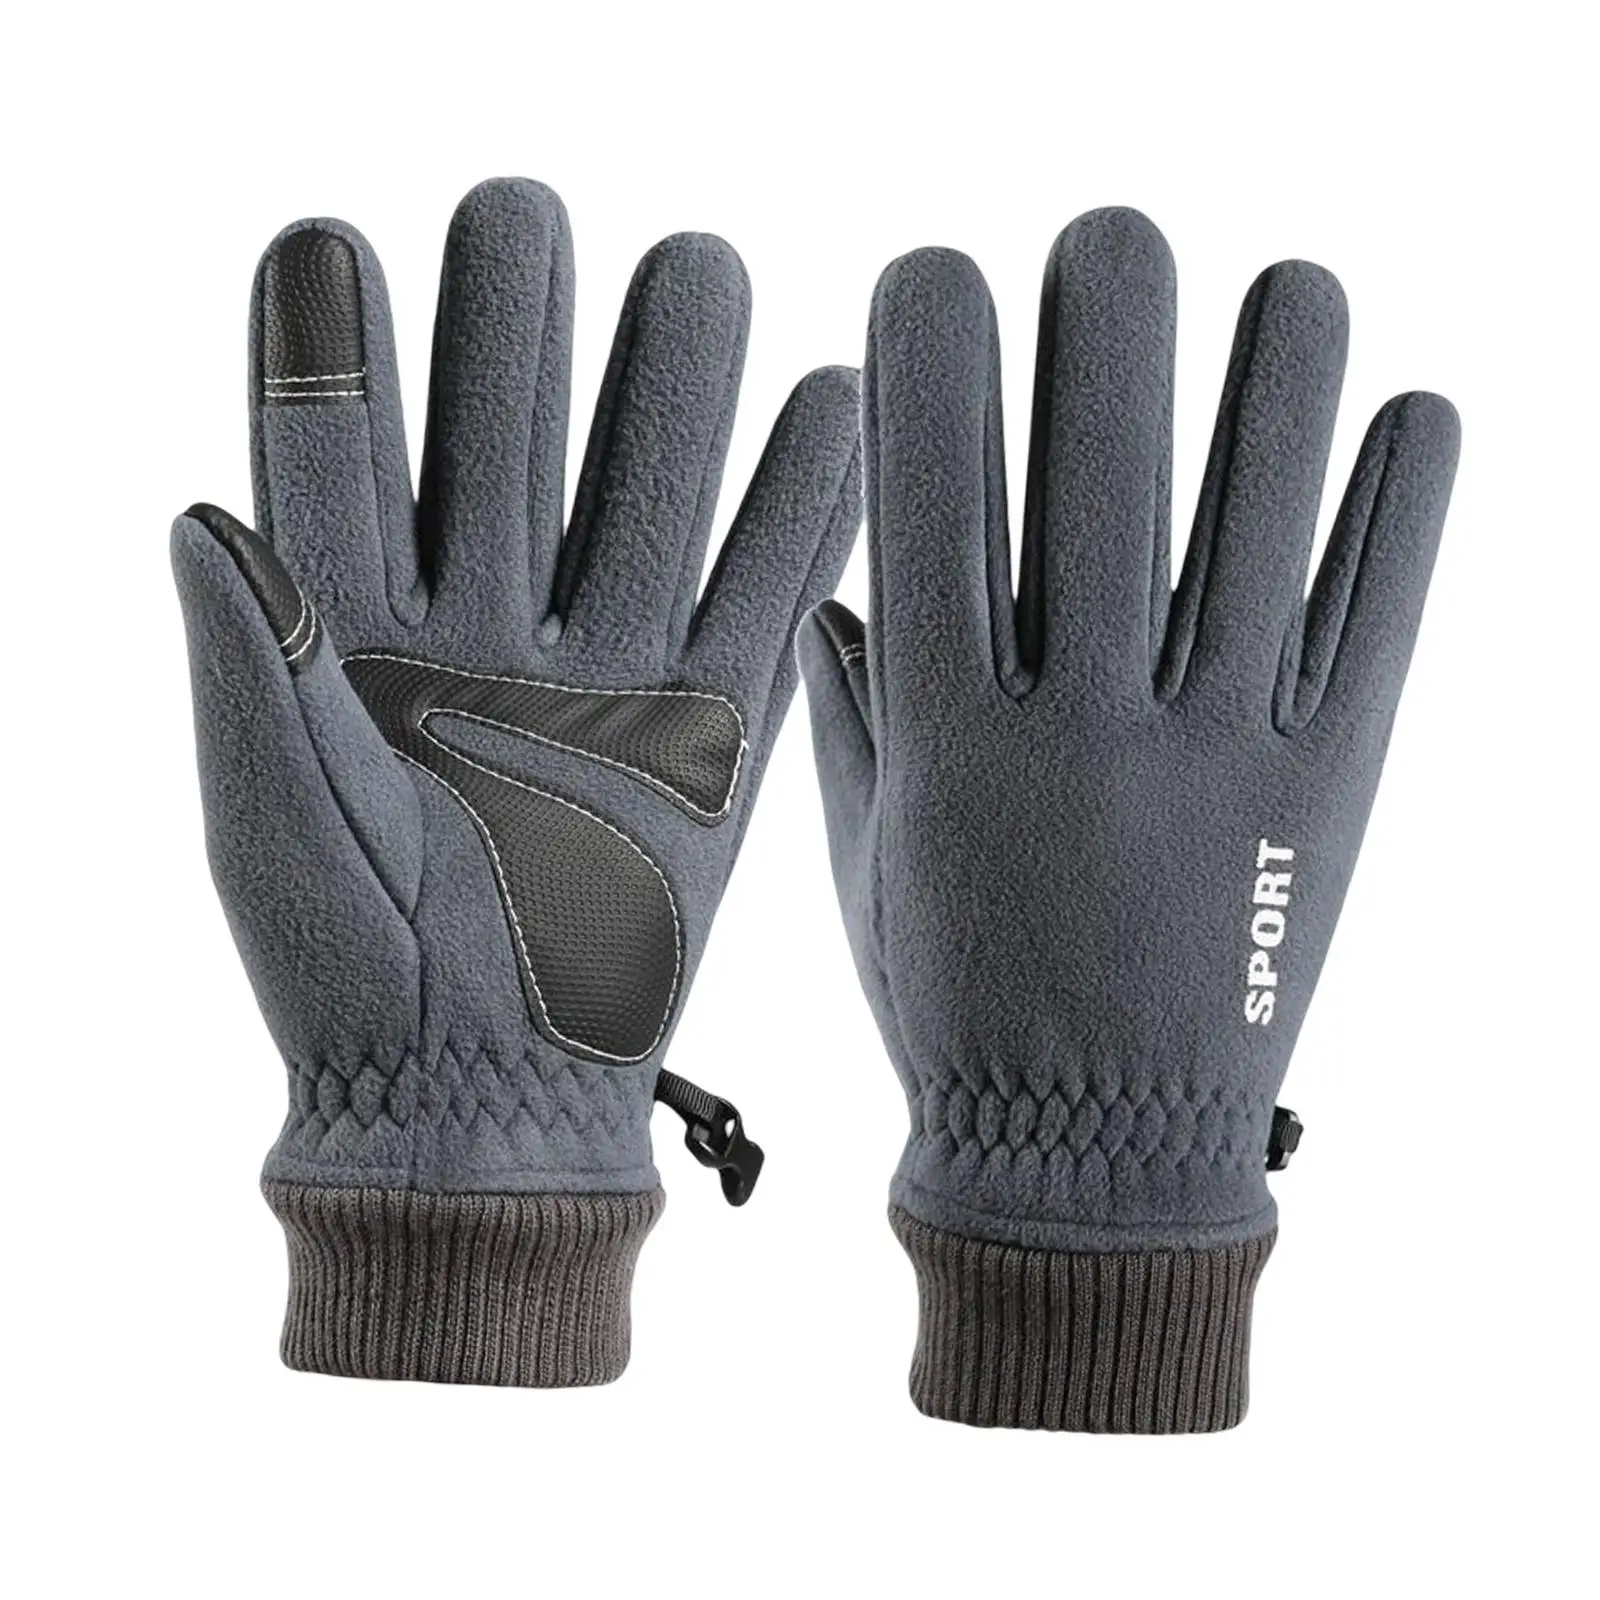 Winter Warm Gloves Anti Screen for Motorcycle workING men Women